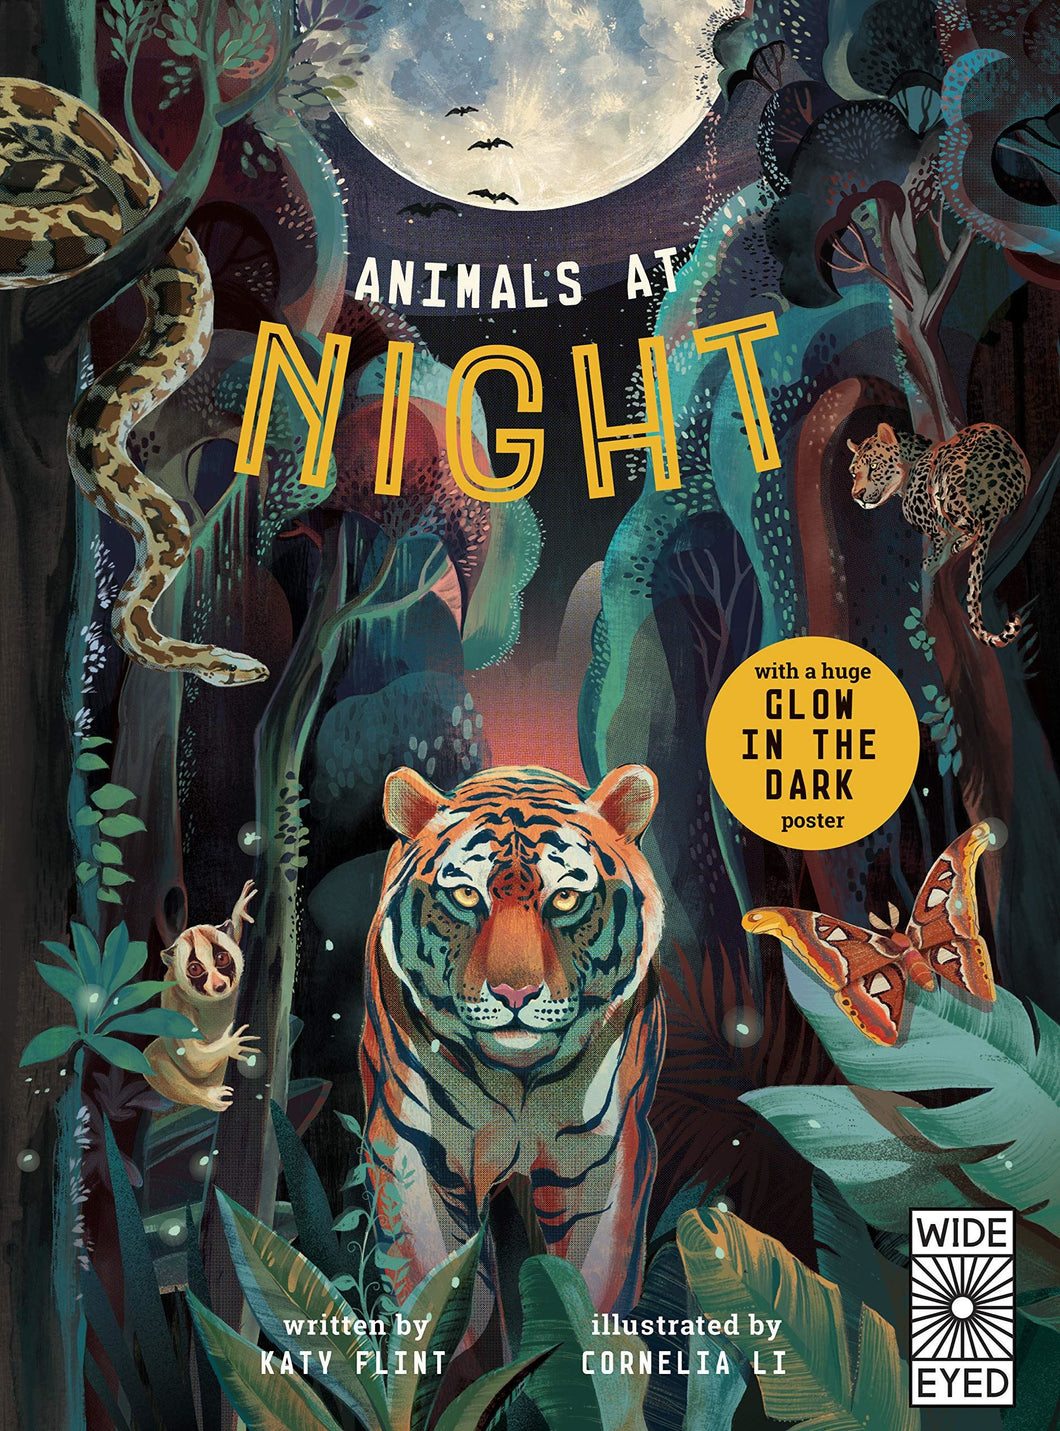 Animals at Night (Glow in the Dark) by Katy Flint & Cornelia Li